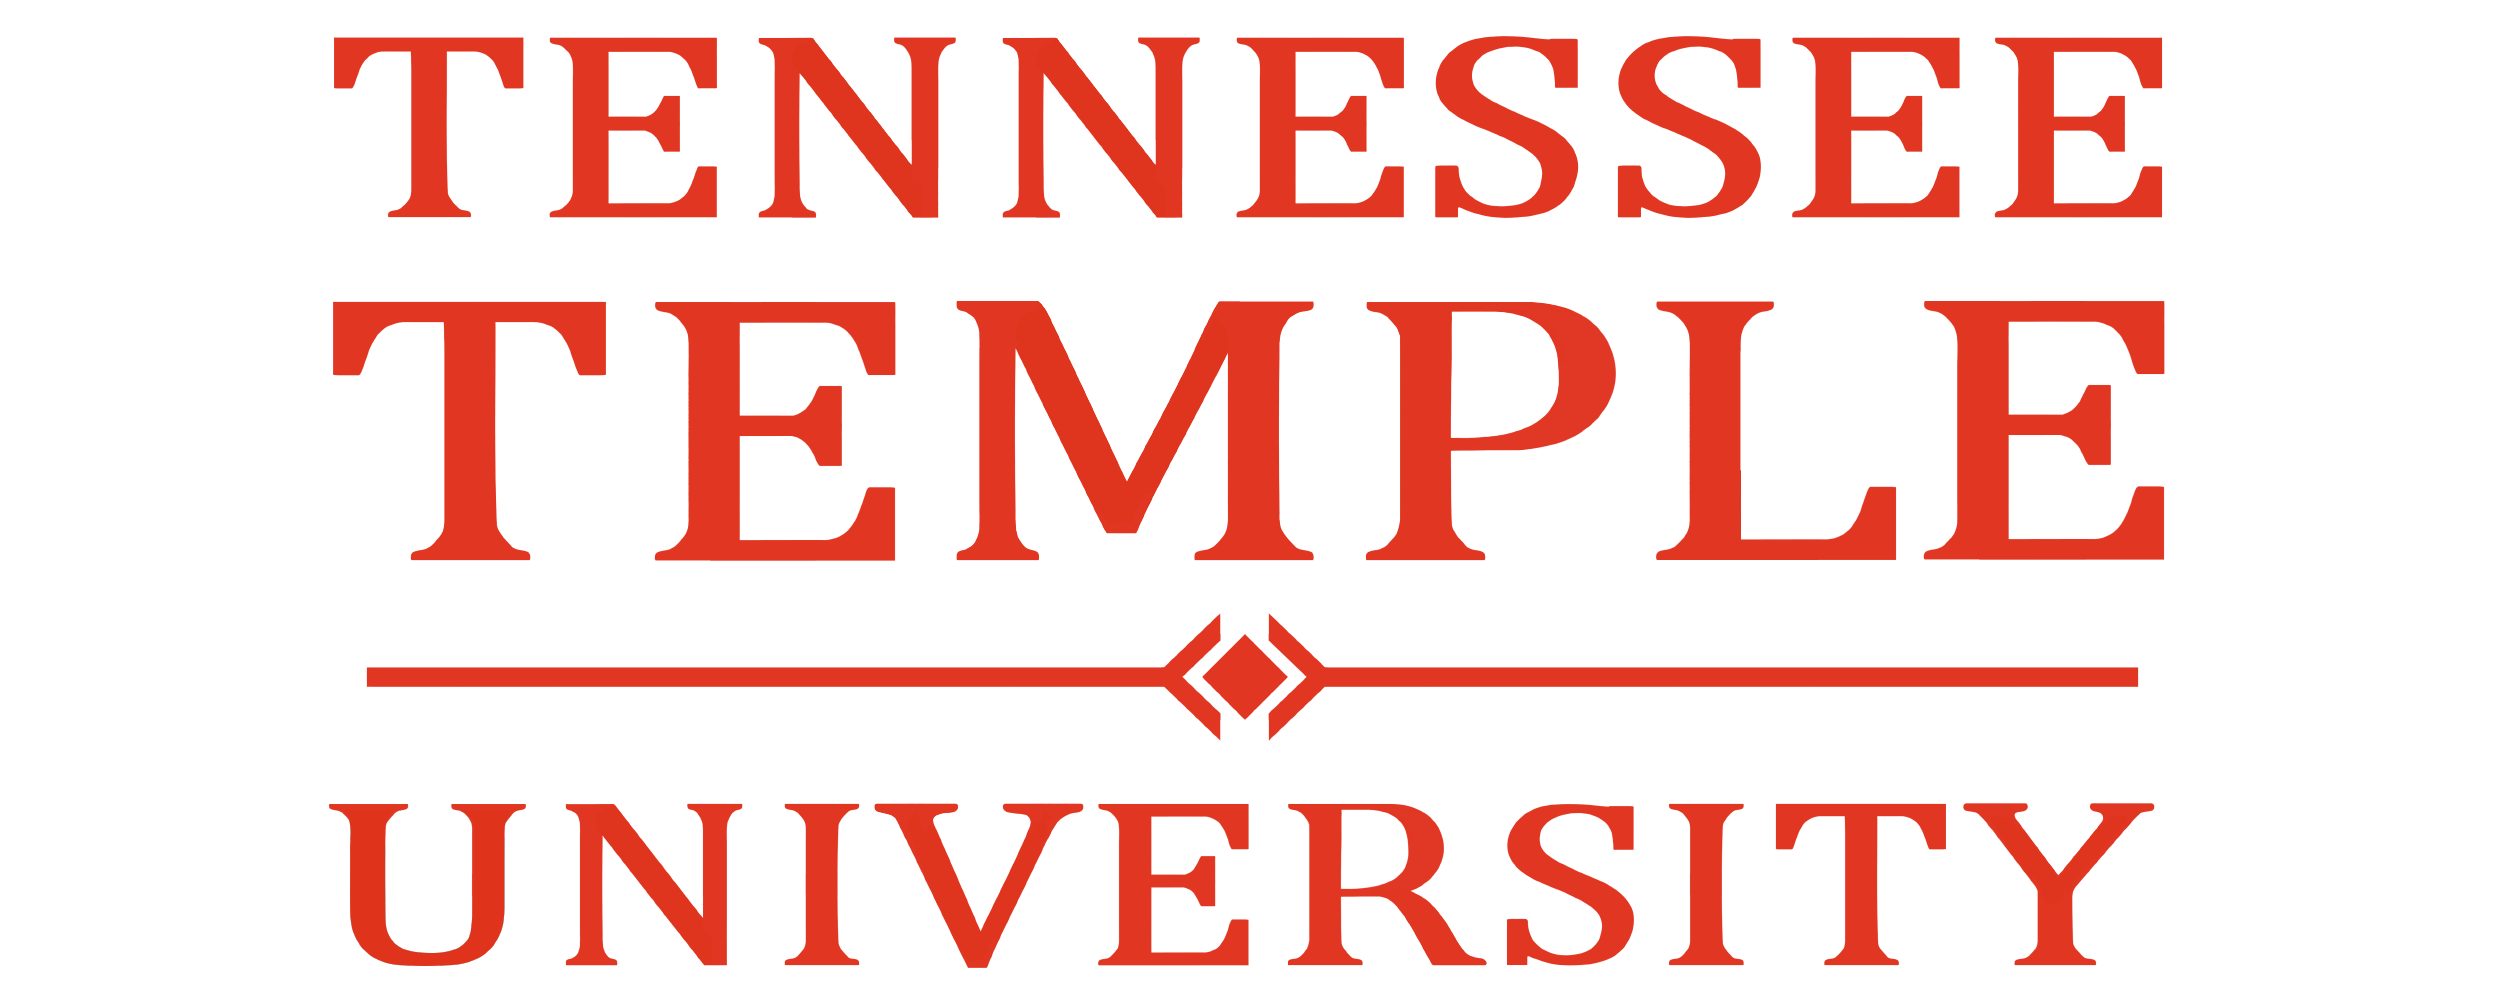 Tennessee Temple University